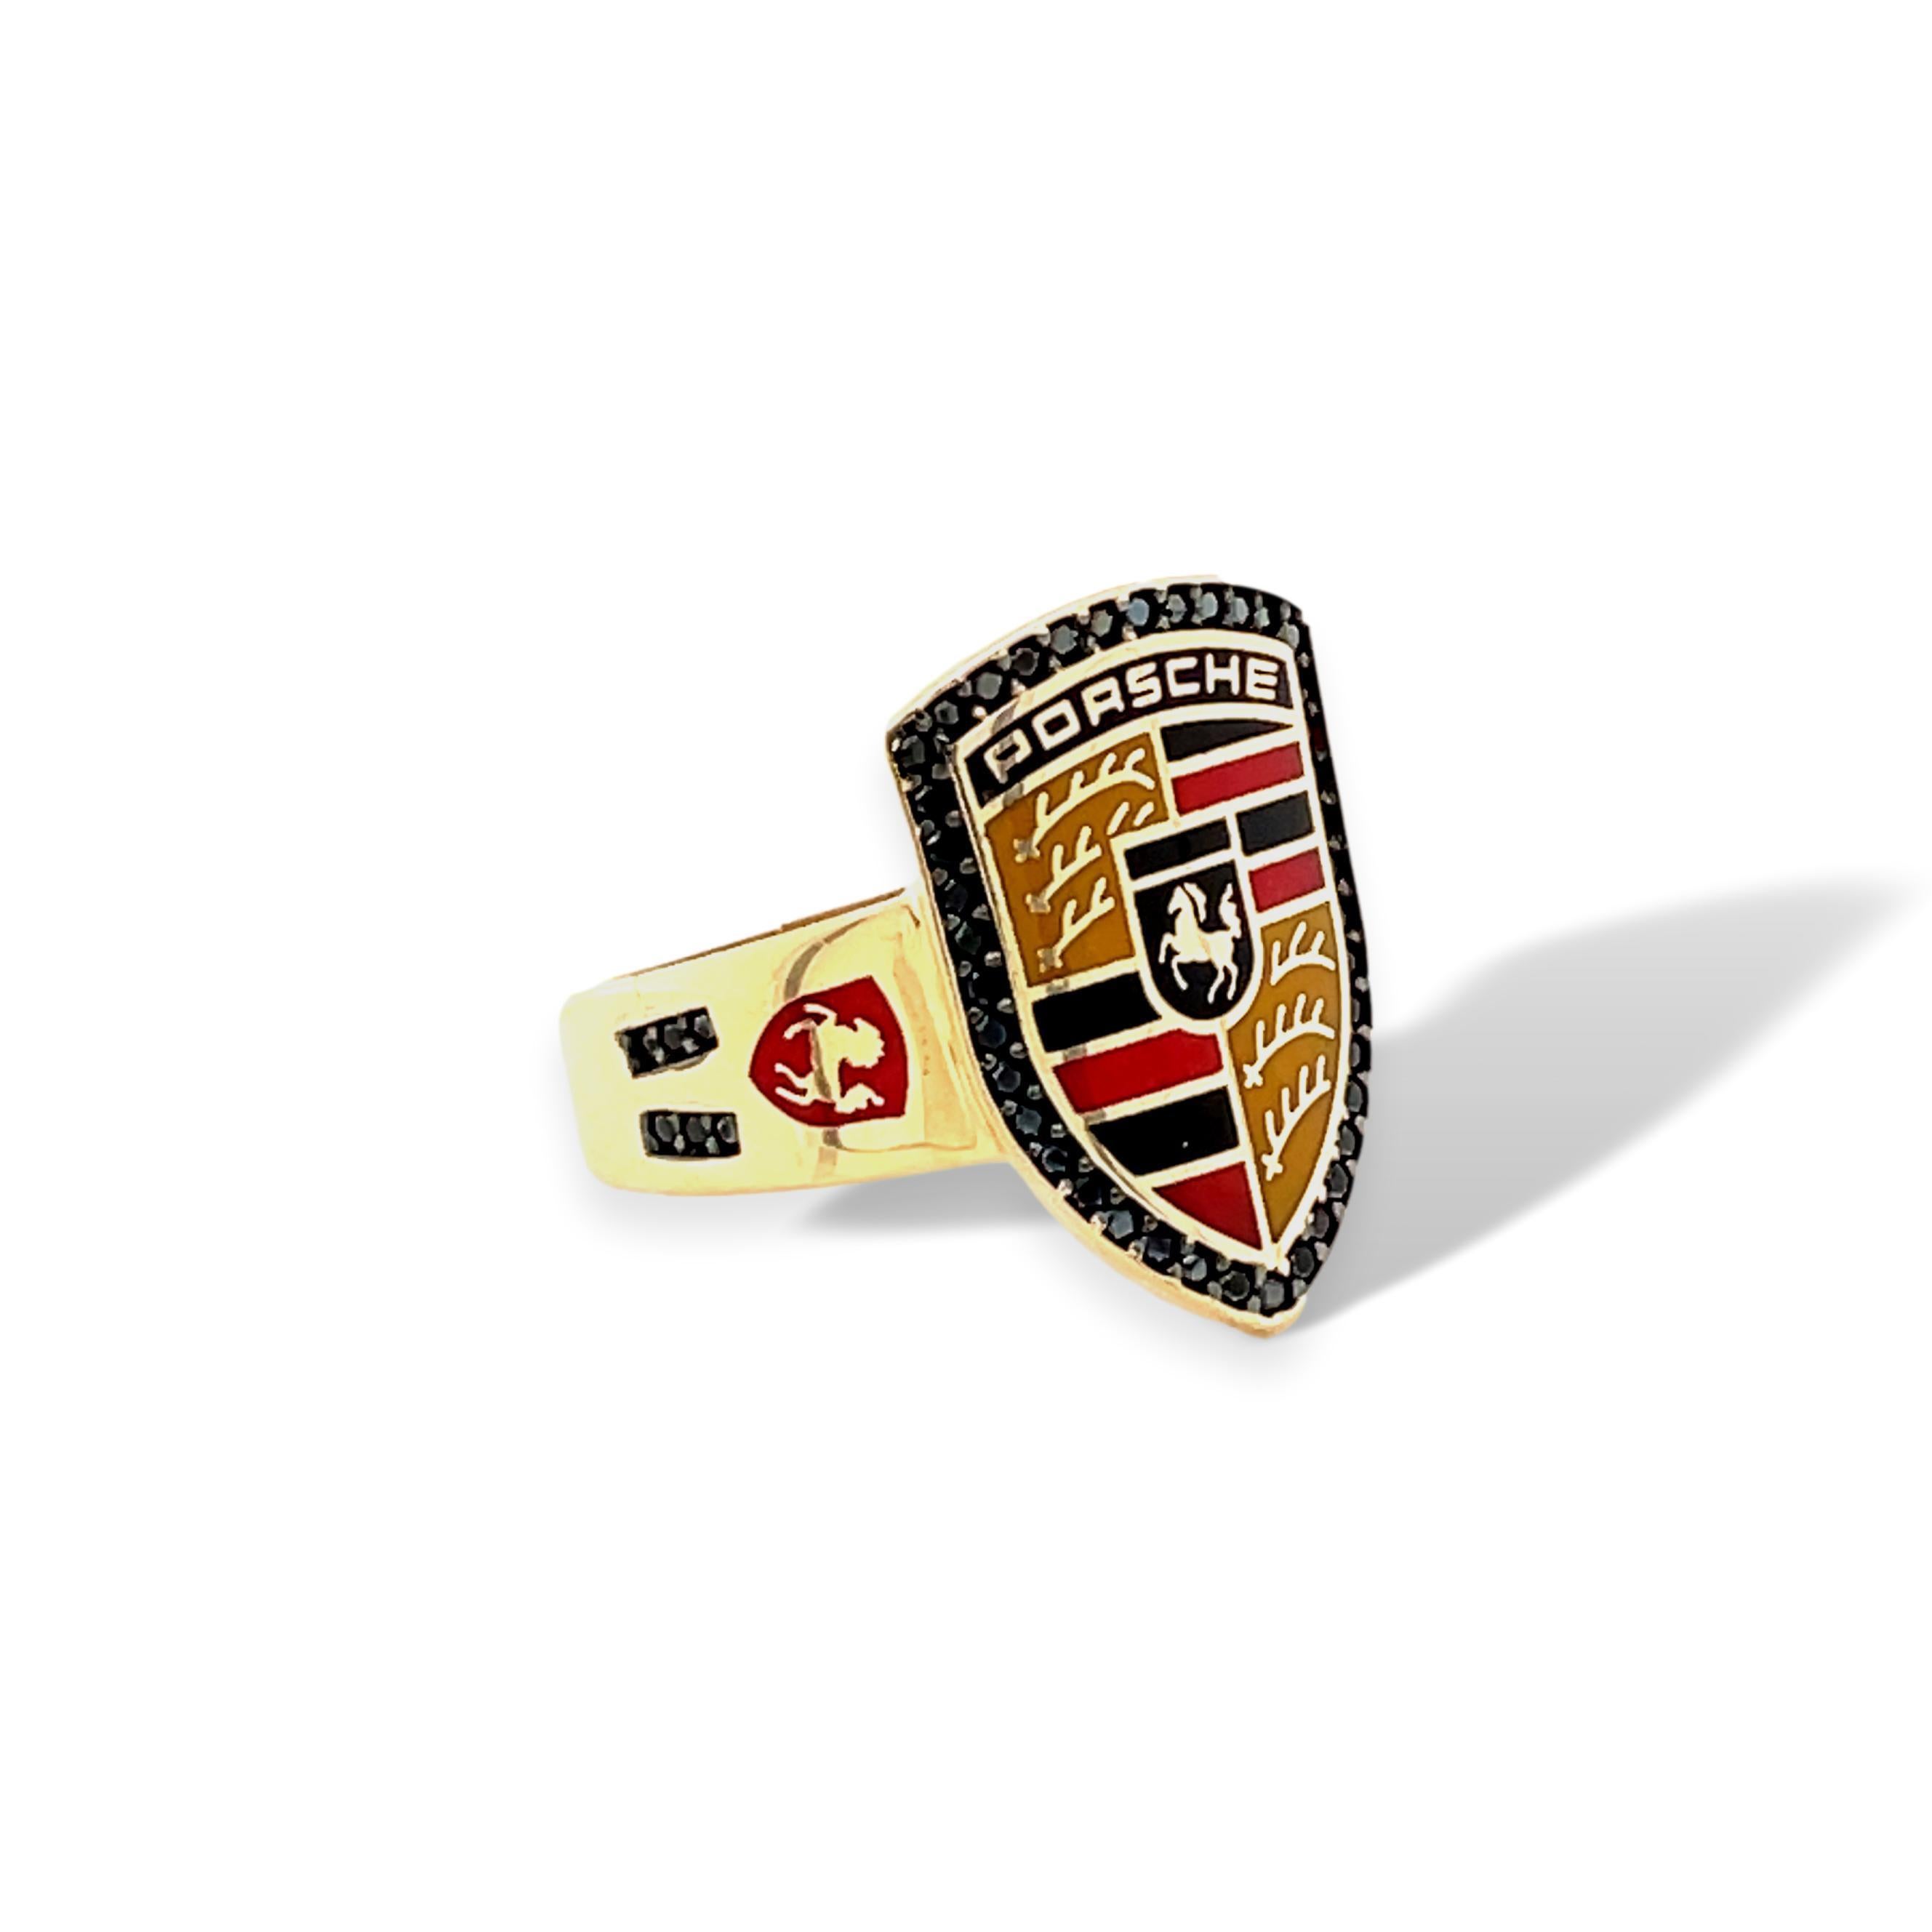 Cigar band signet ring with Porsche emblem. The 7/8